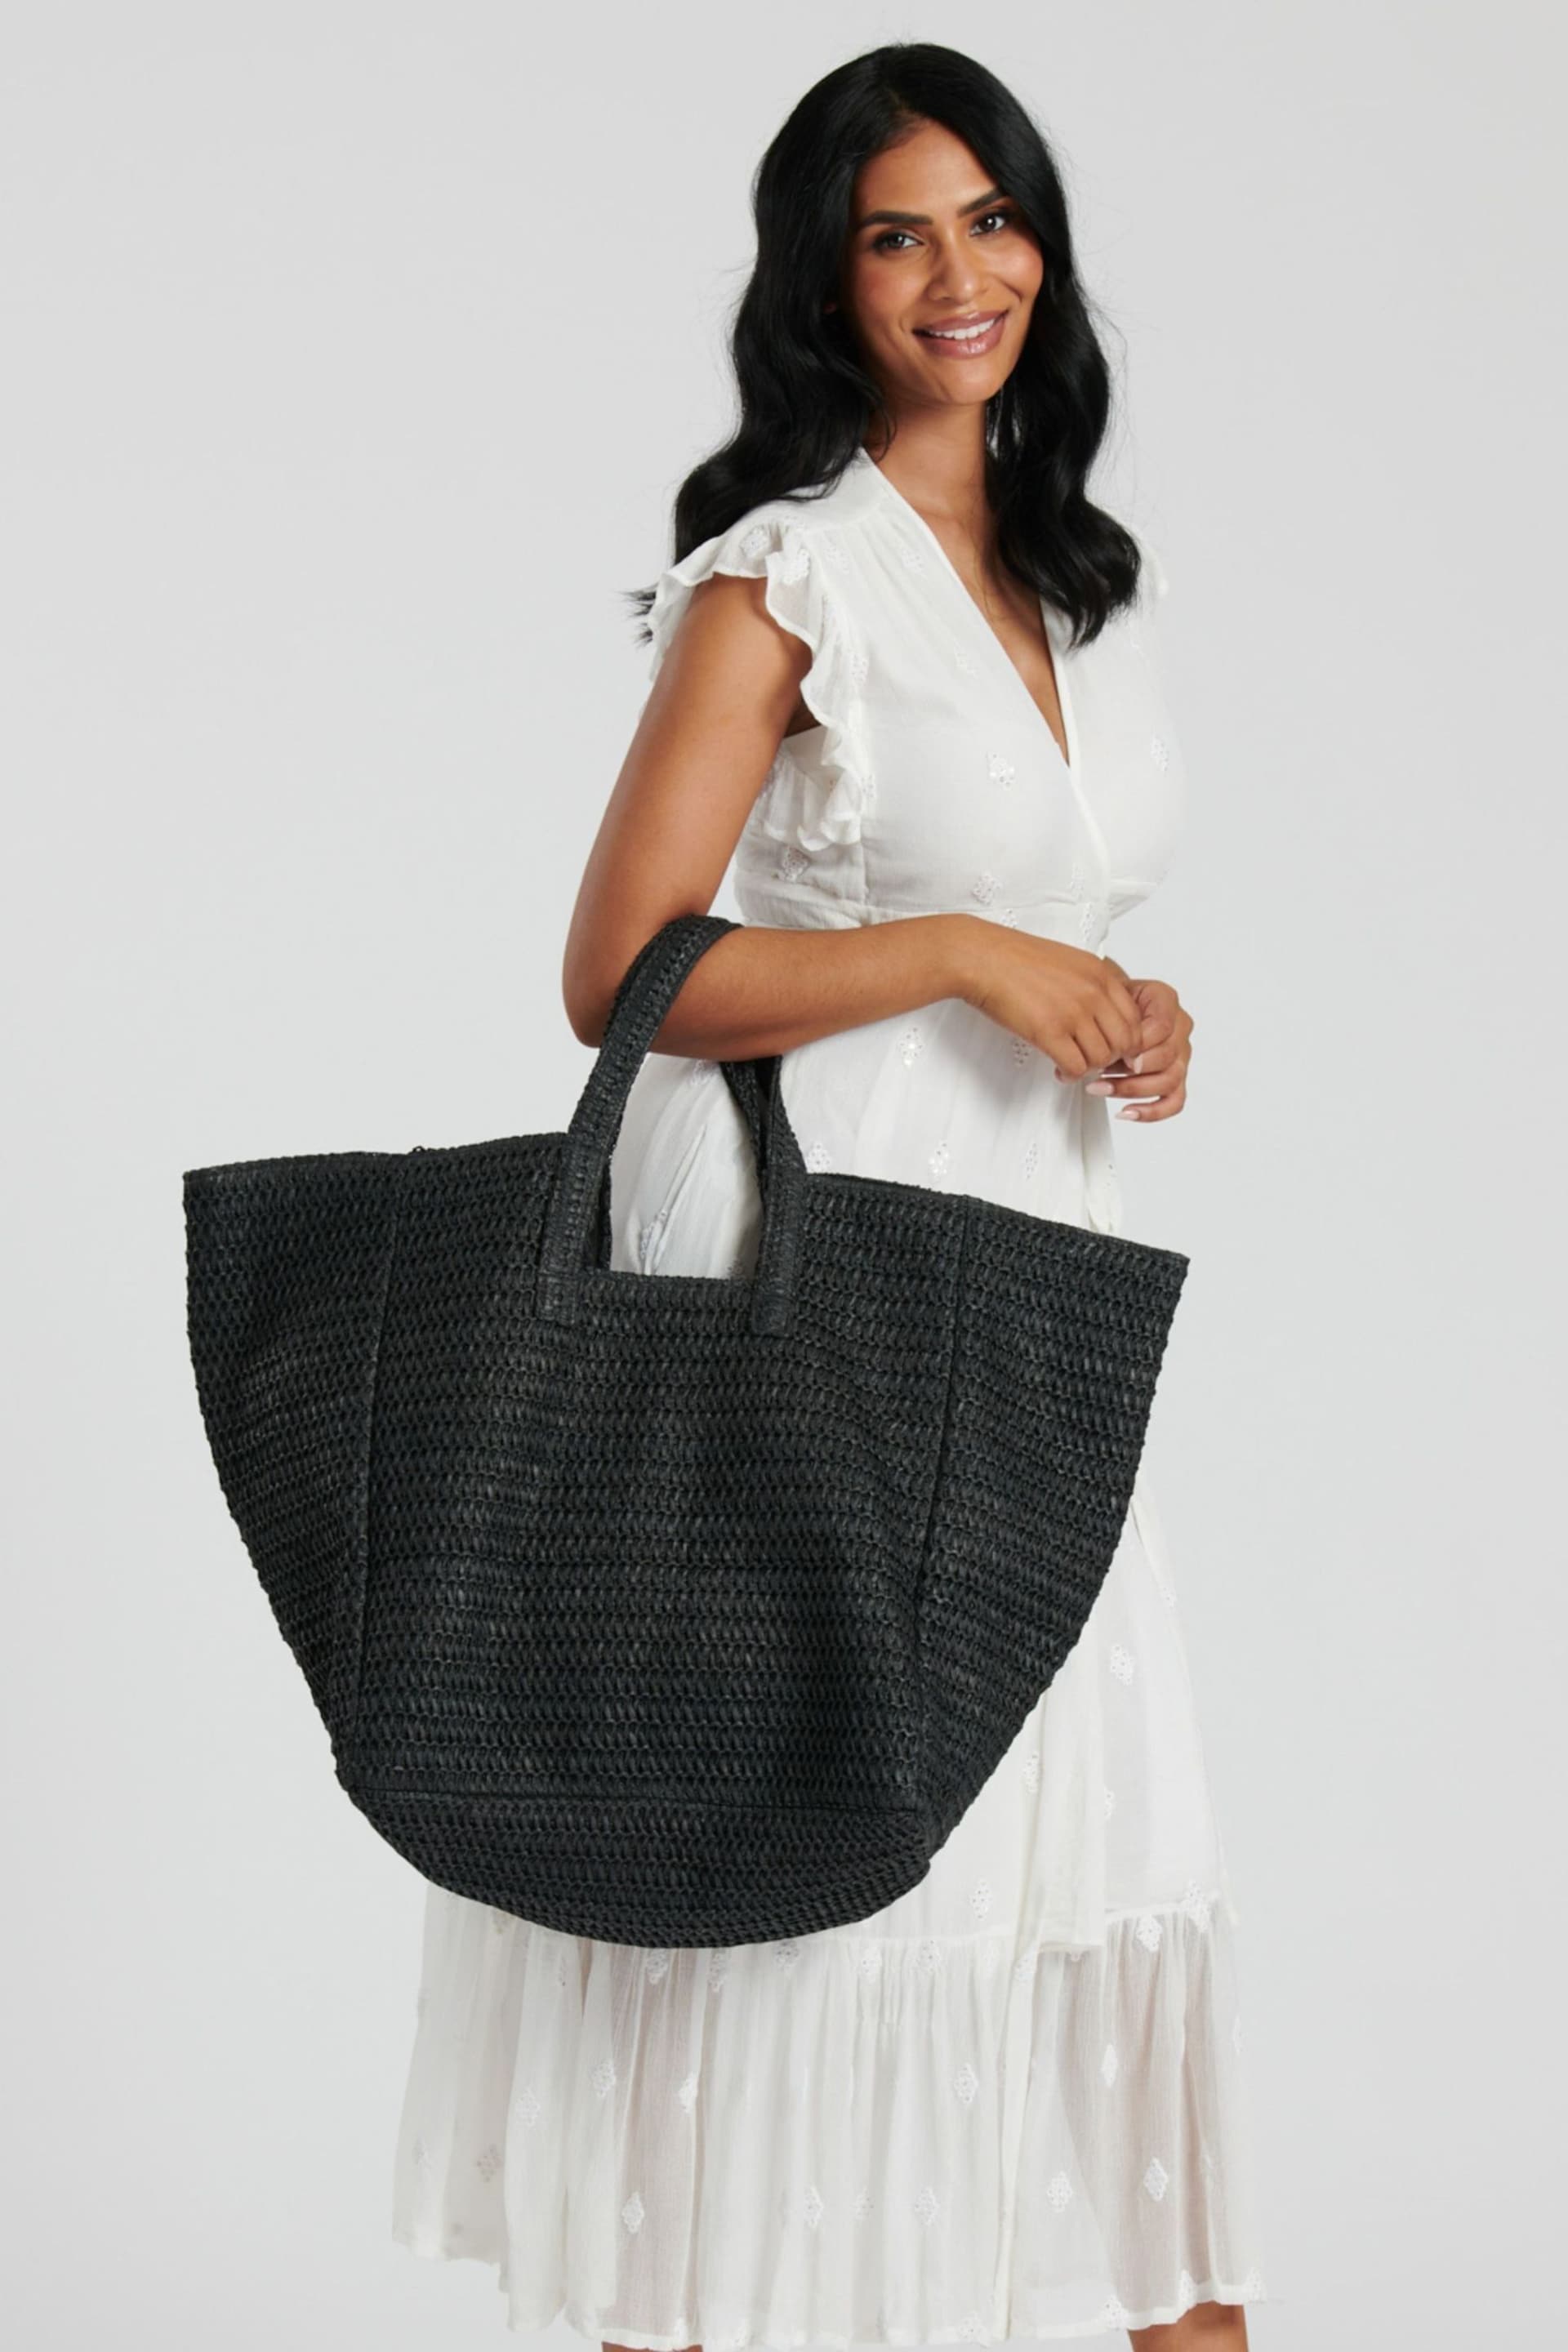 South Beach Black Oversized Woven Shoulder Bag - Image 1 of 2